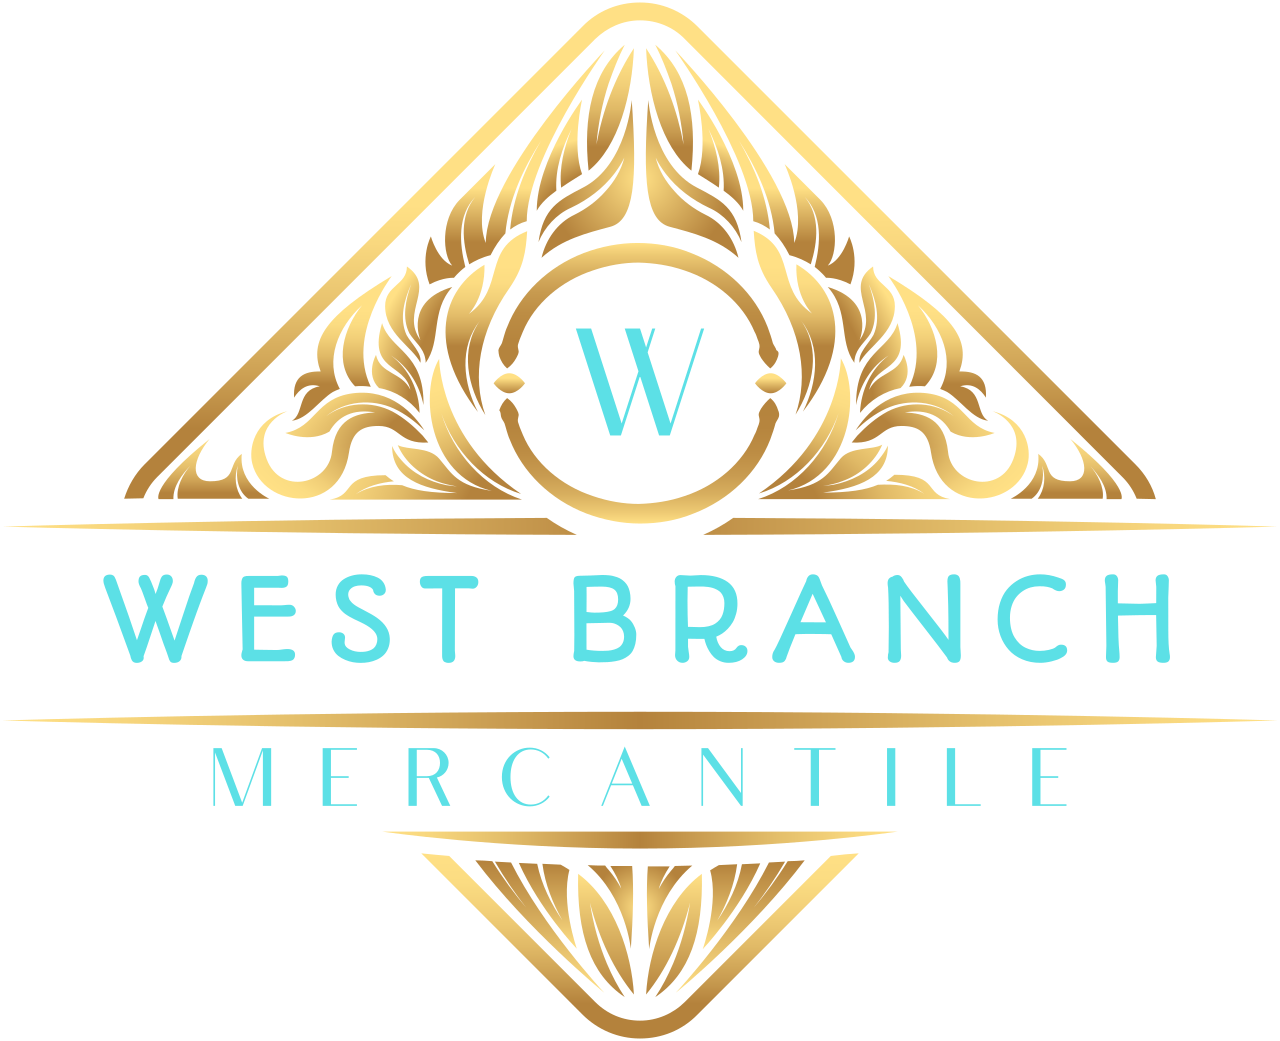 West Branch's logo